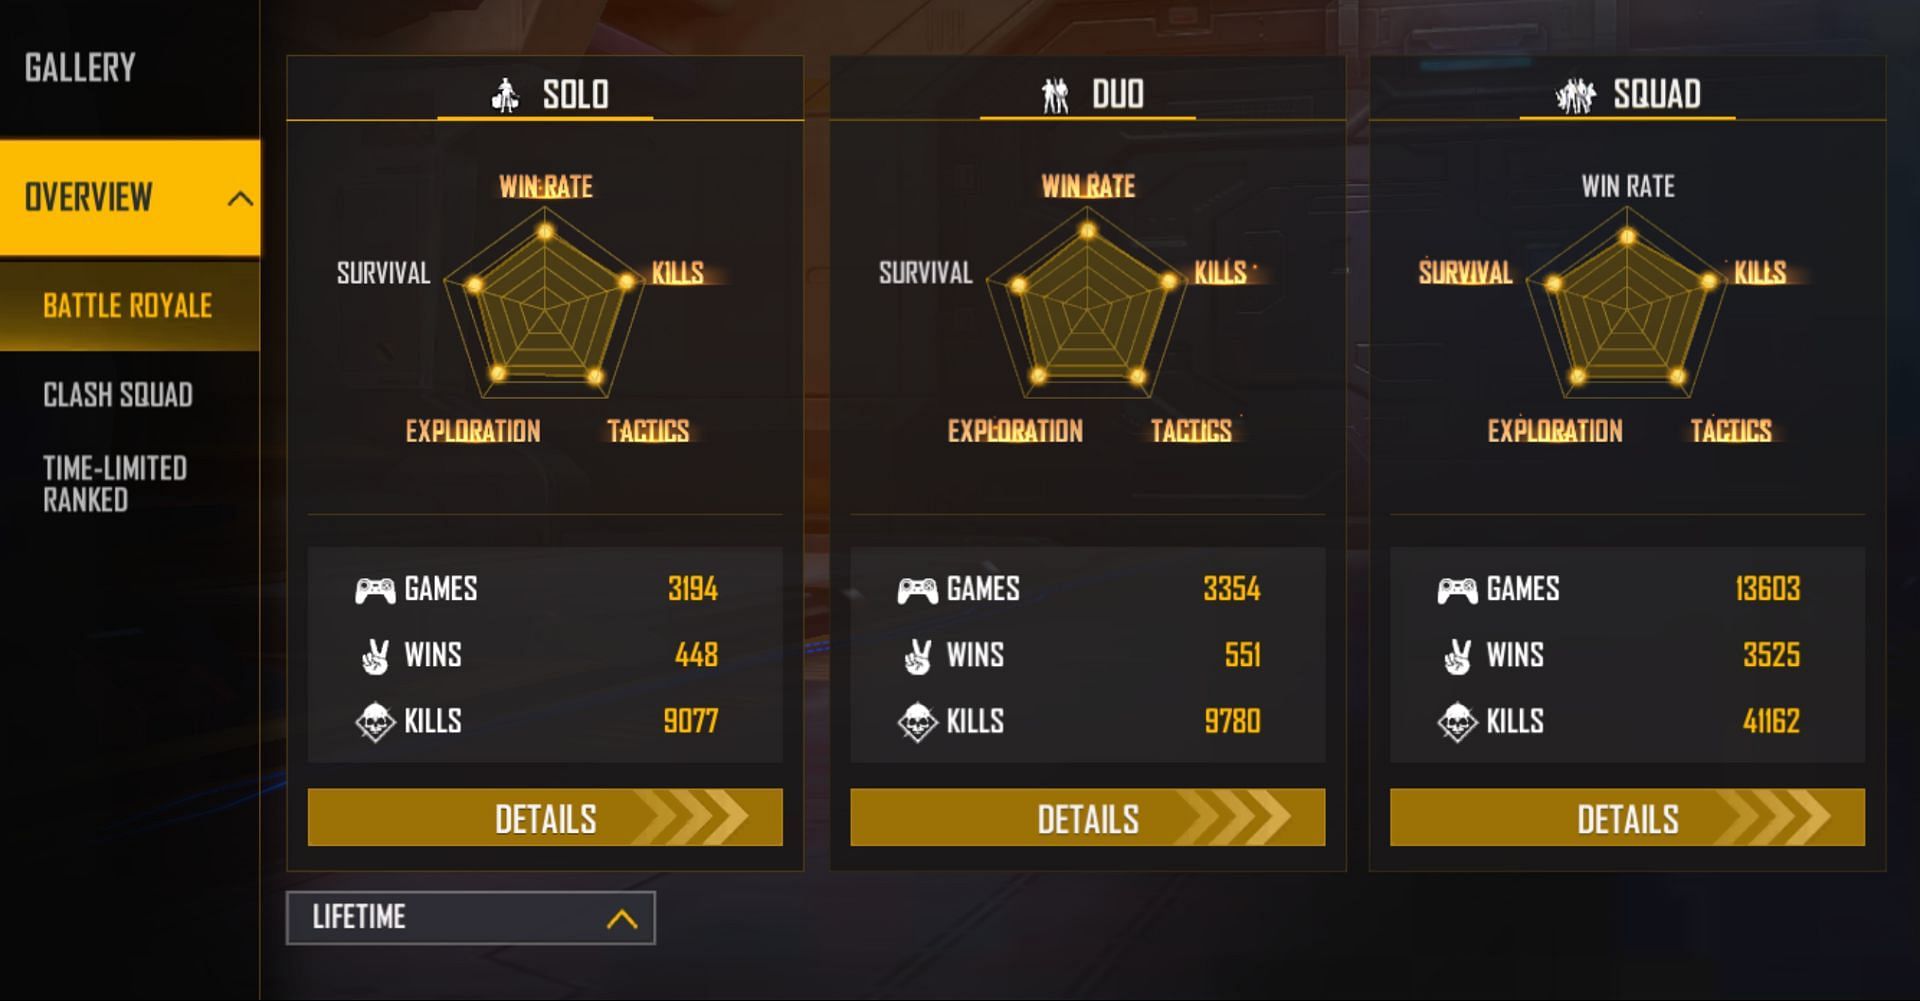 X-Mania has 41k kills in squad games (Image via Garena)